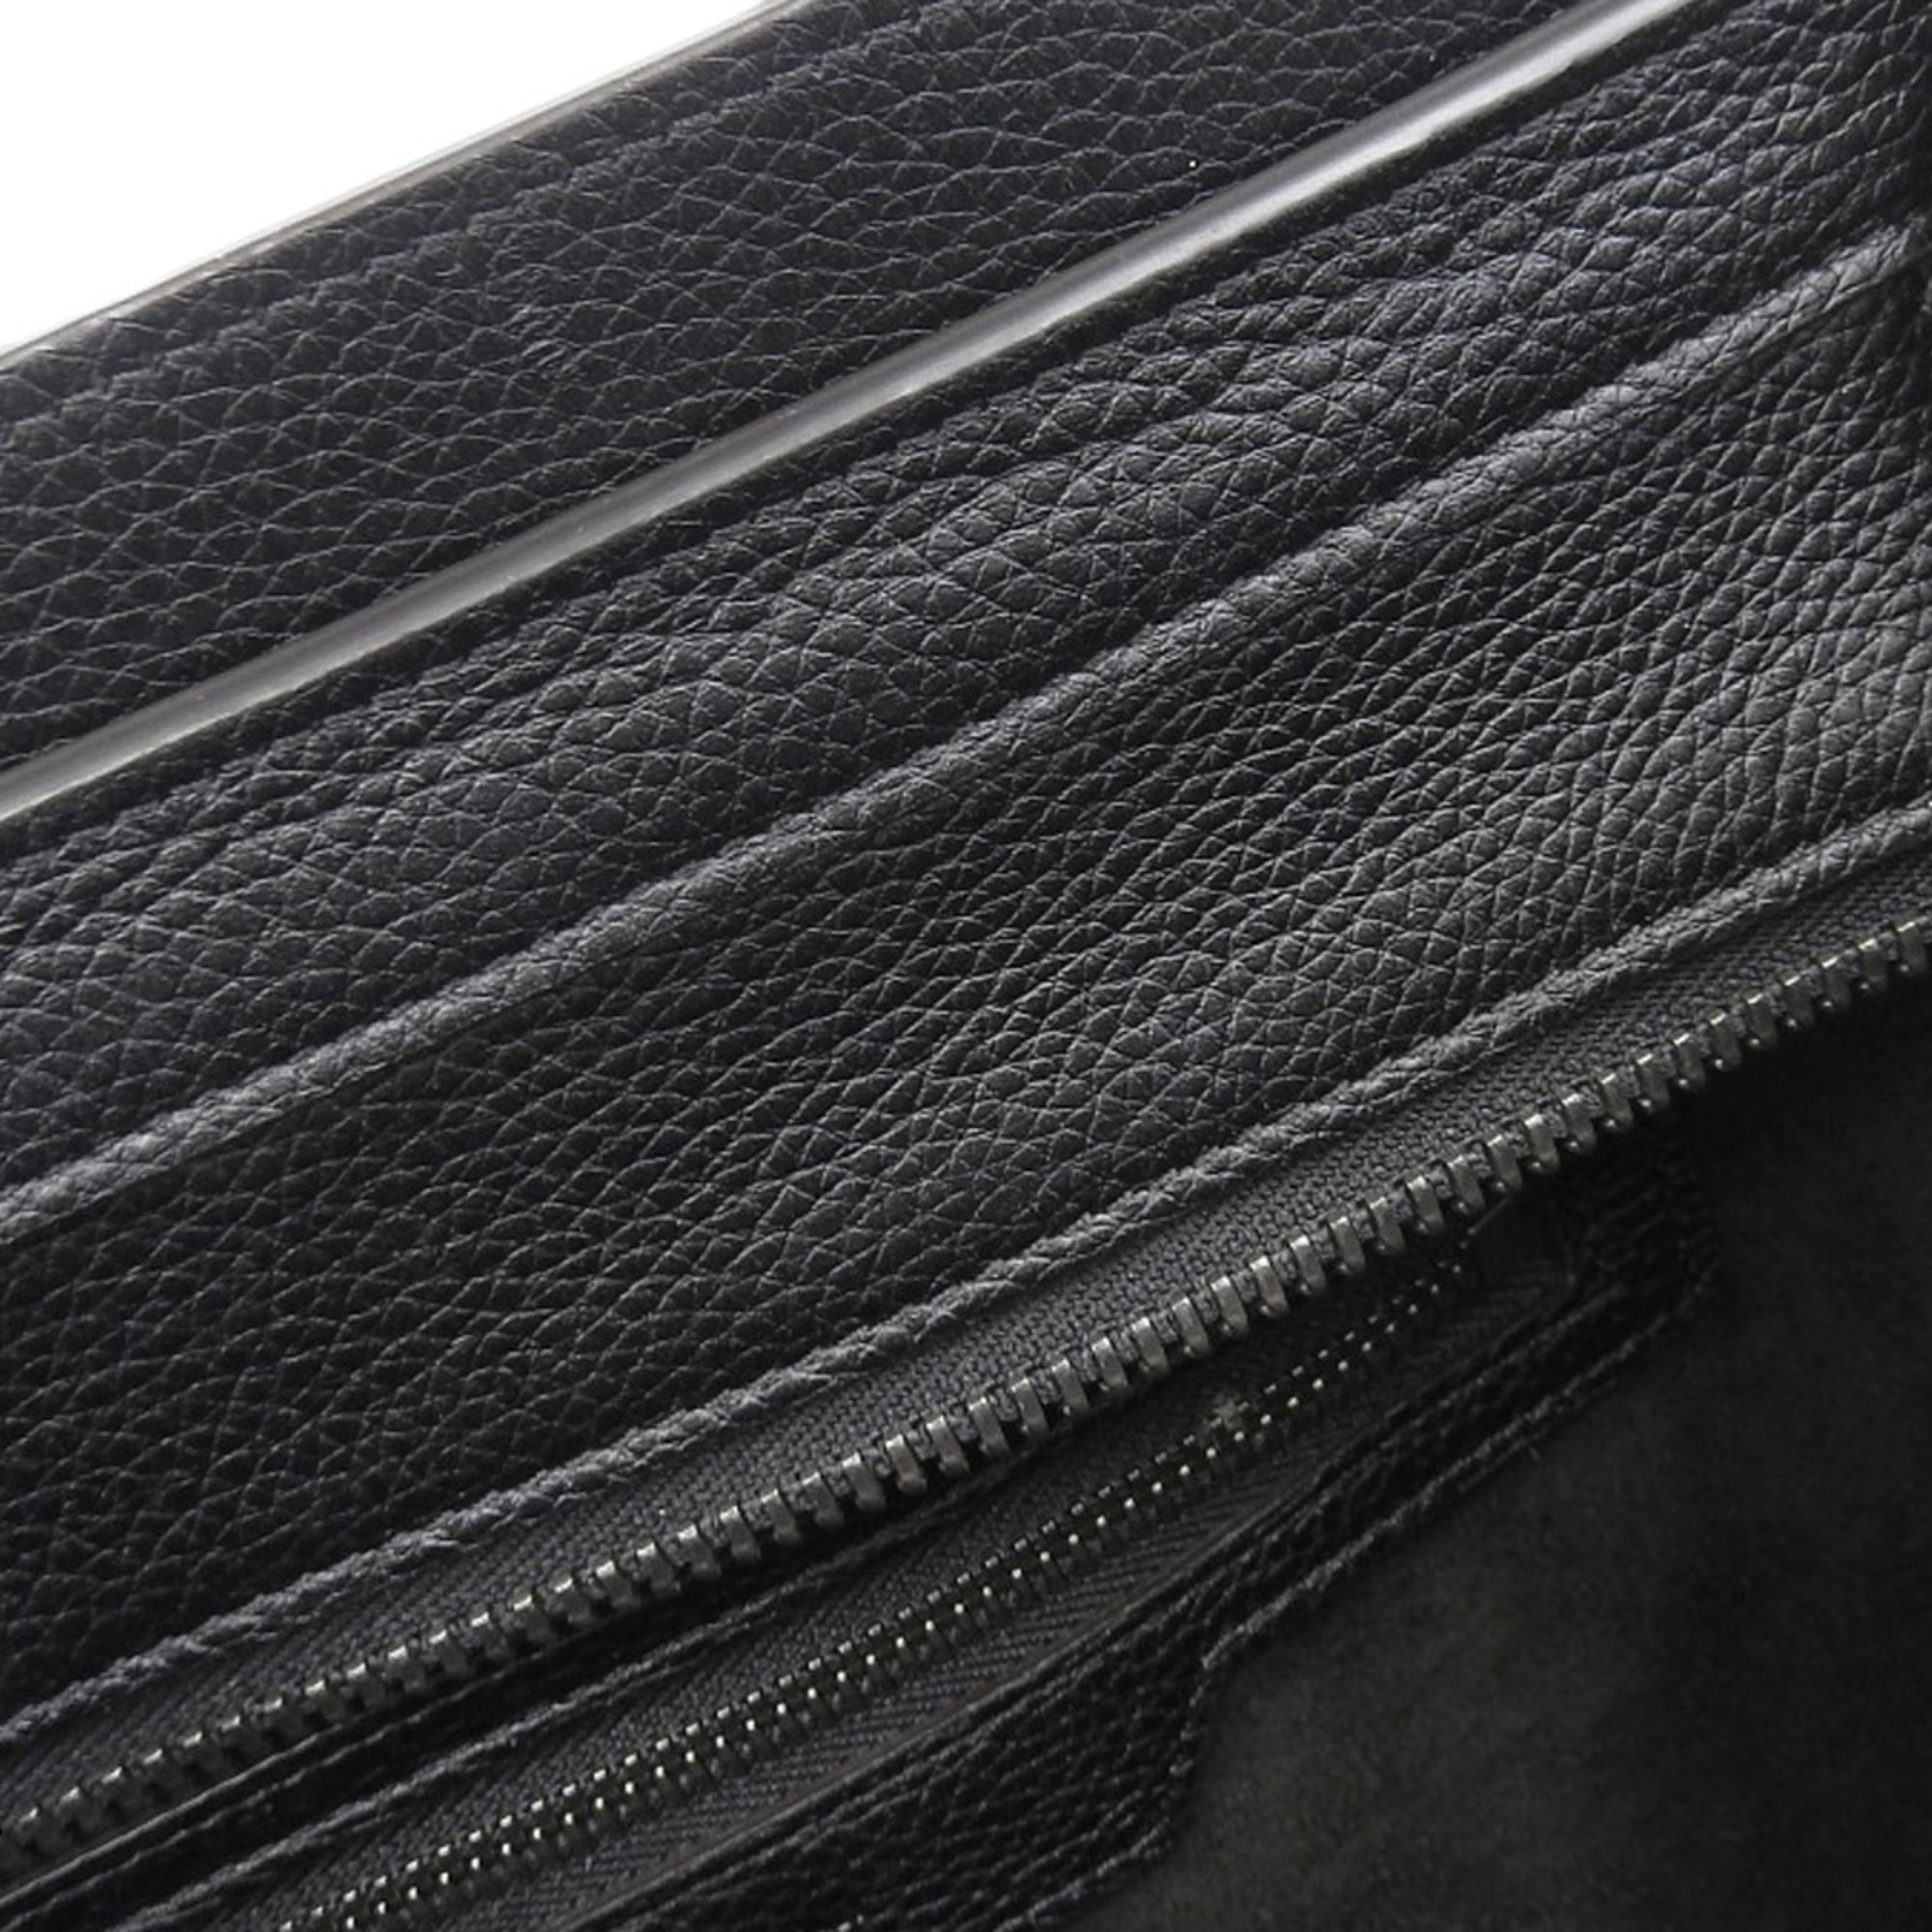 CELINE Luggage Micro 189793DRU 38NO Handbag Bag Leather Black